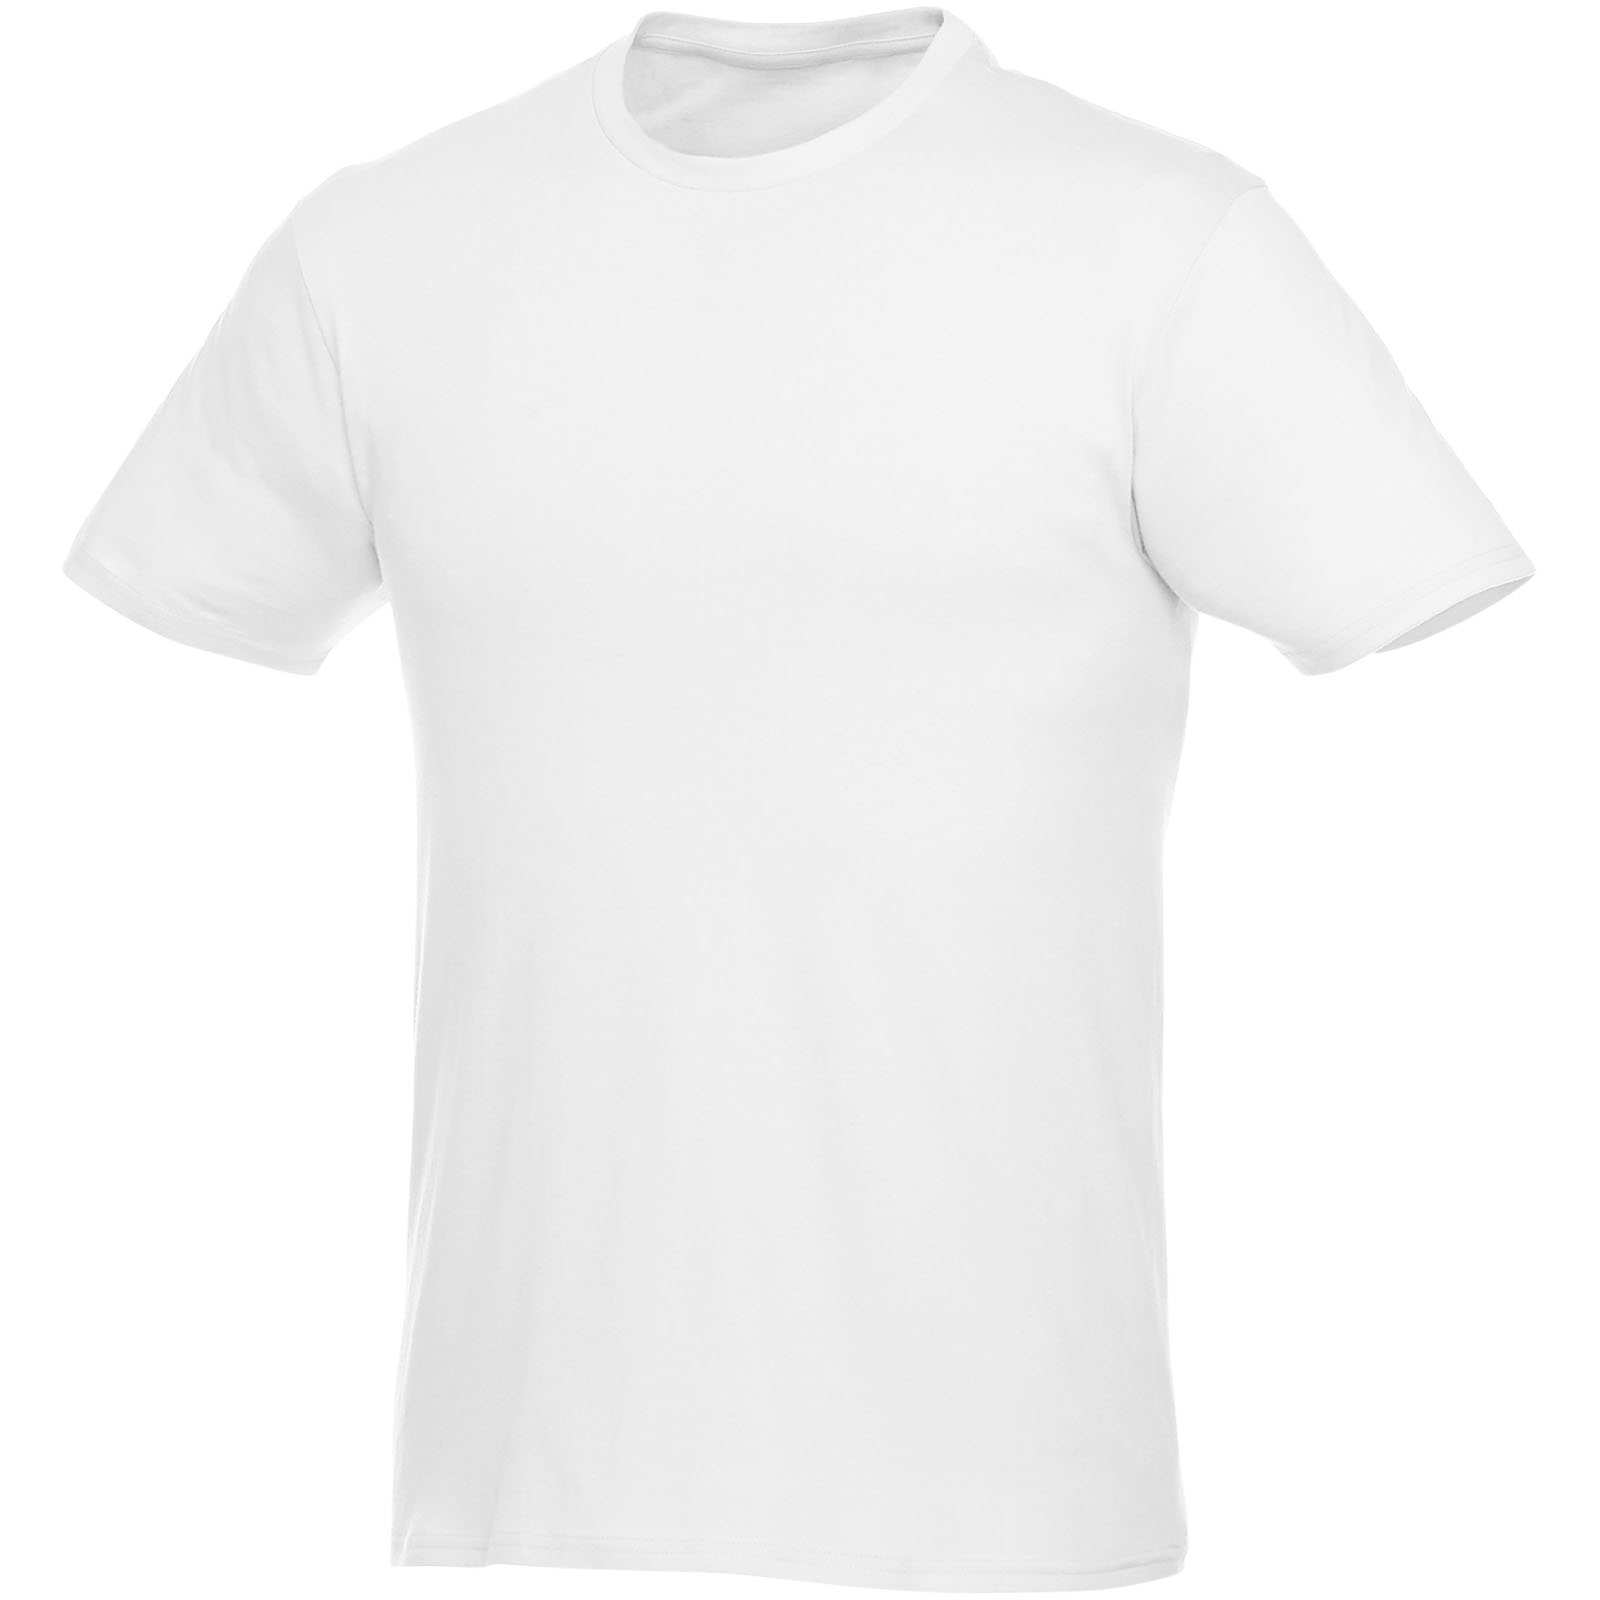 T-shirts - Heros short sleeve men's t-shirt